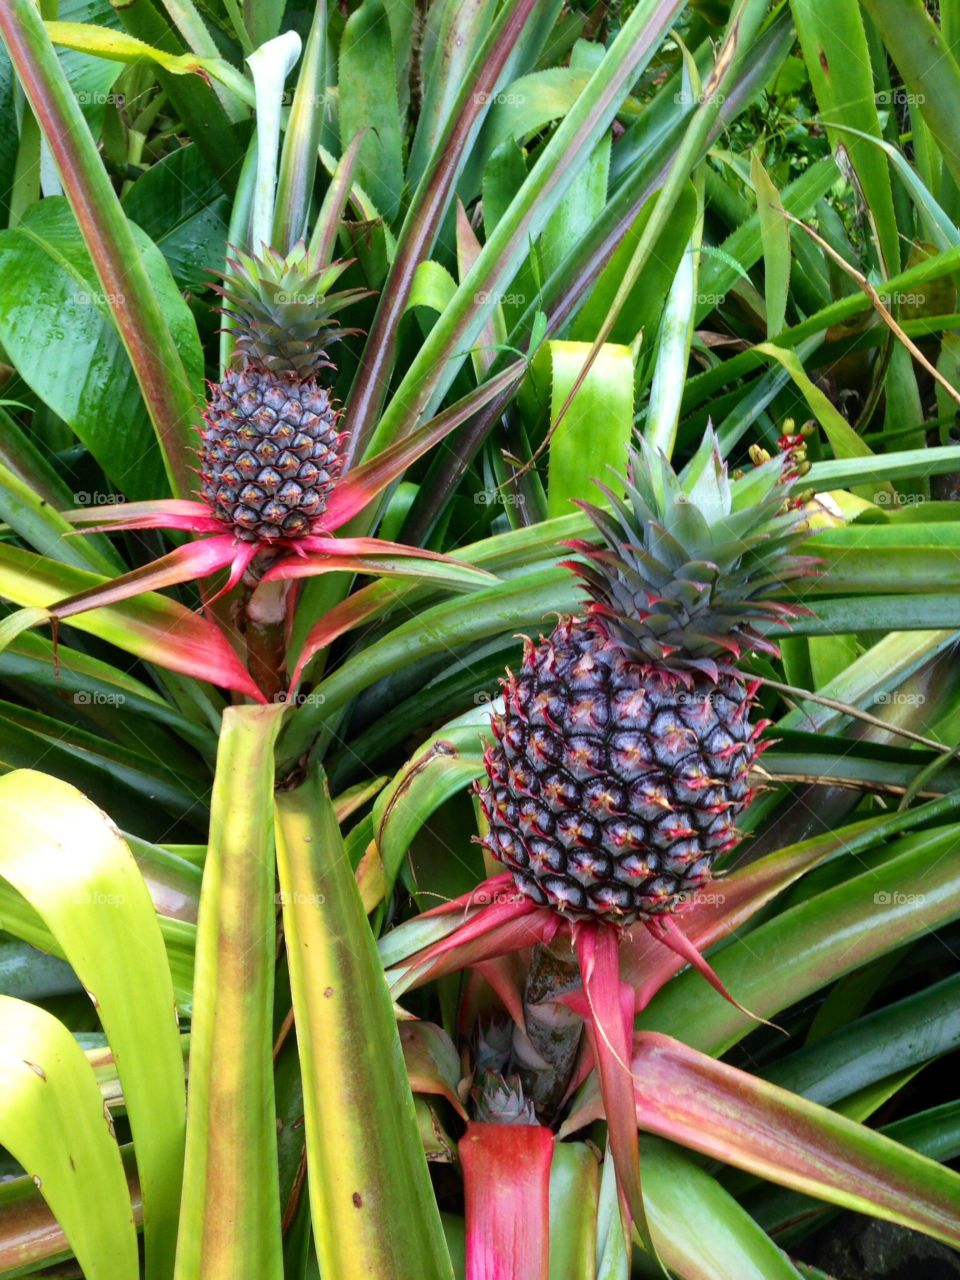 Growing Pineapples in Fiji